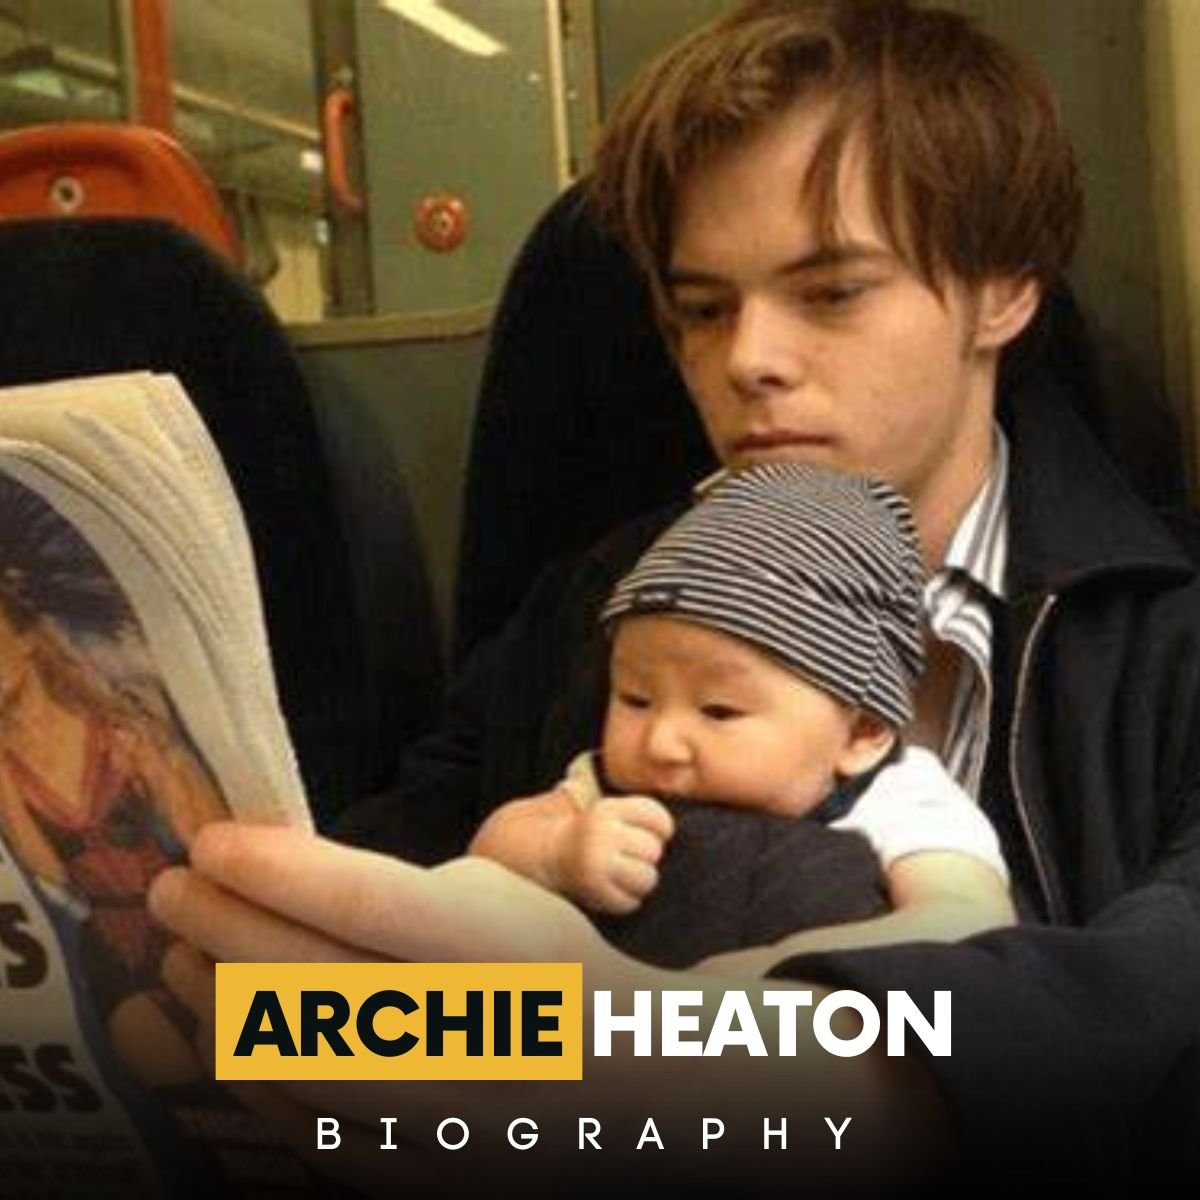 Archie Heaton Biography